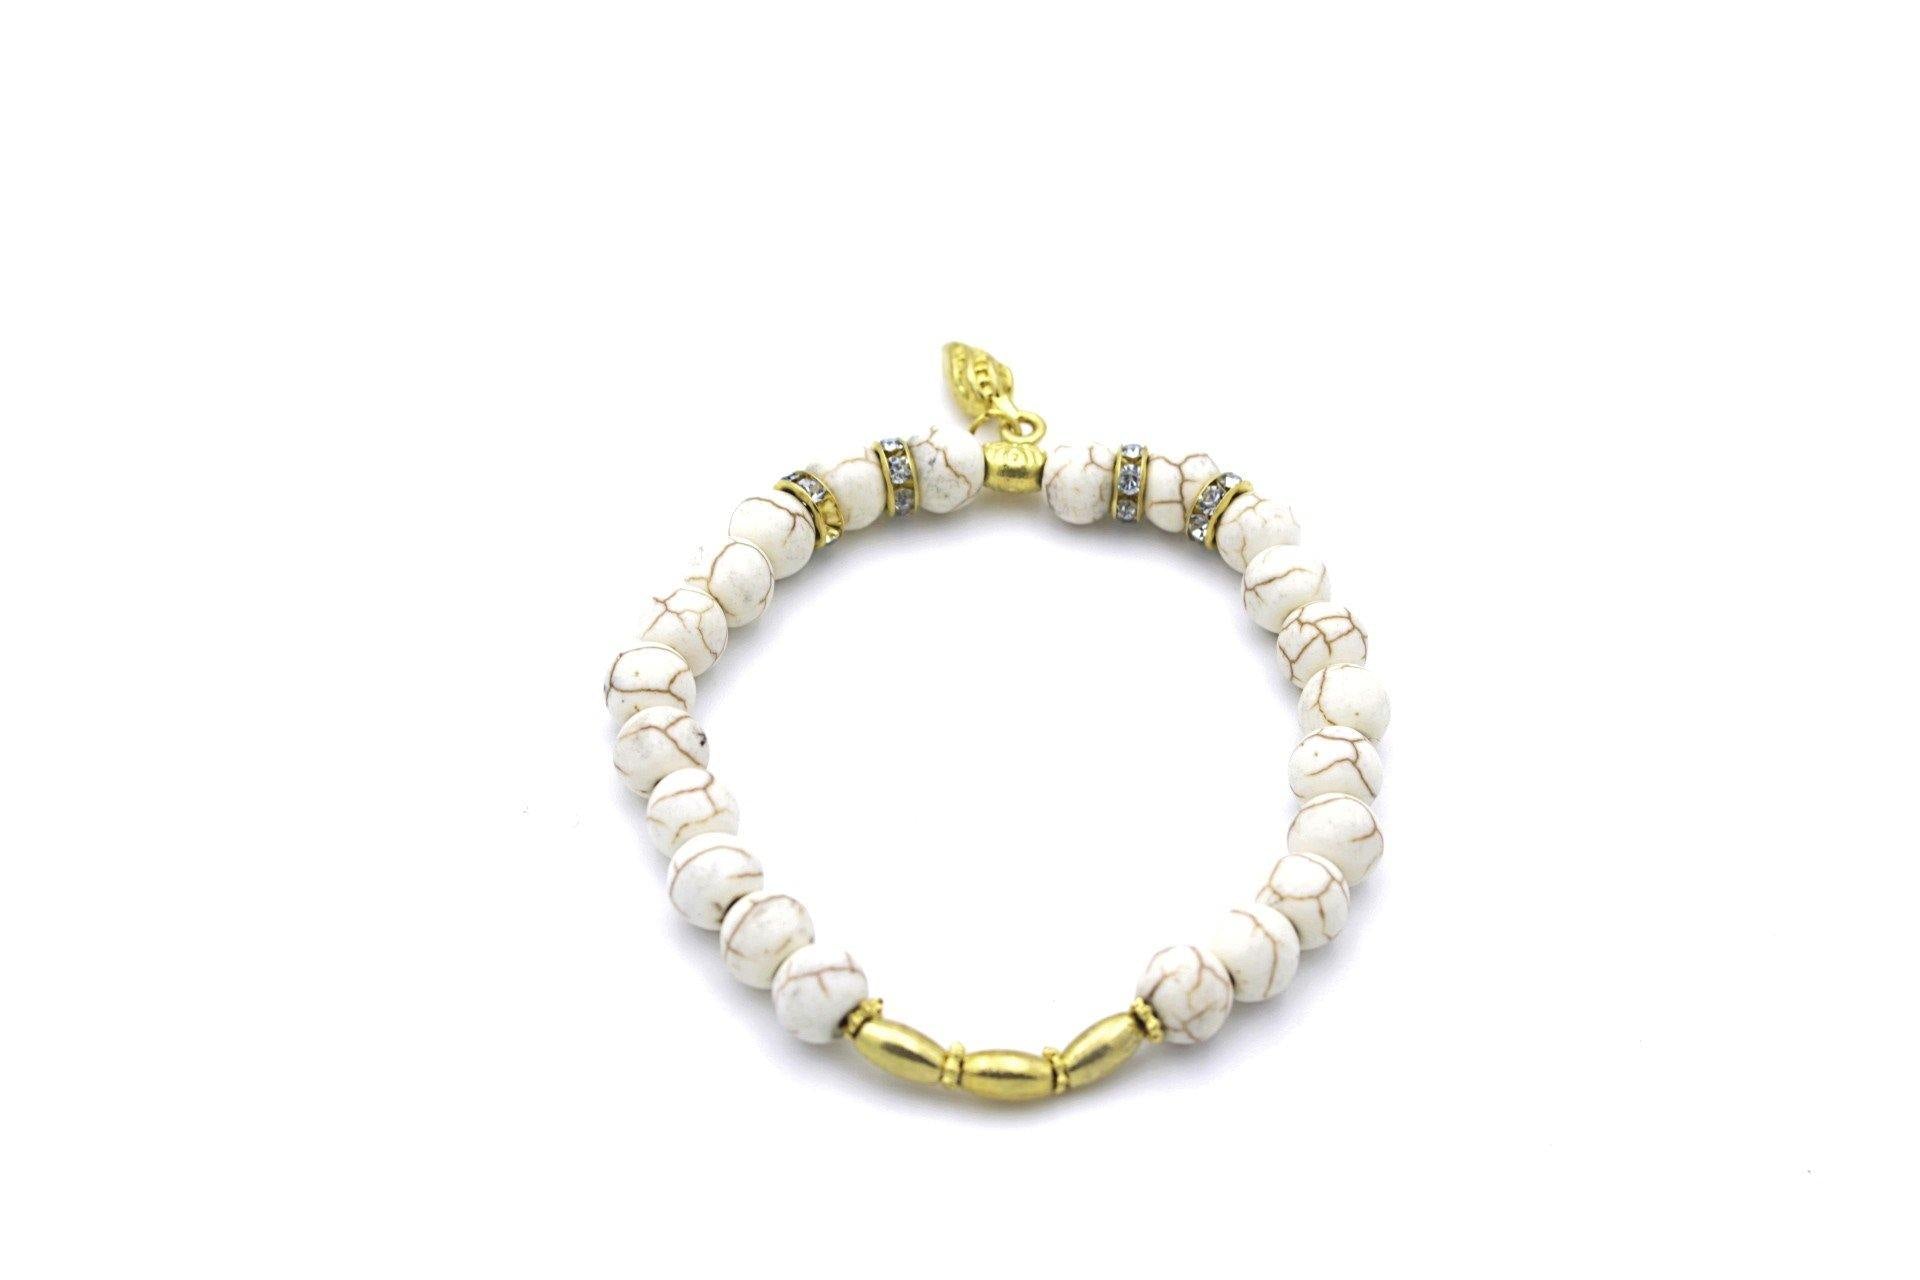 howlite bracelets uk luxury r visible jewelery